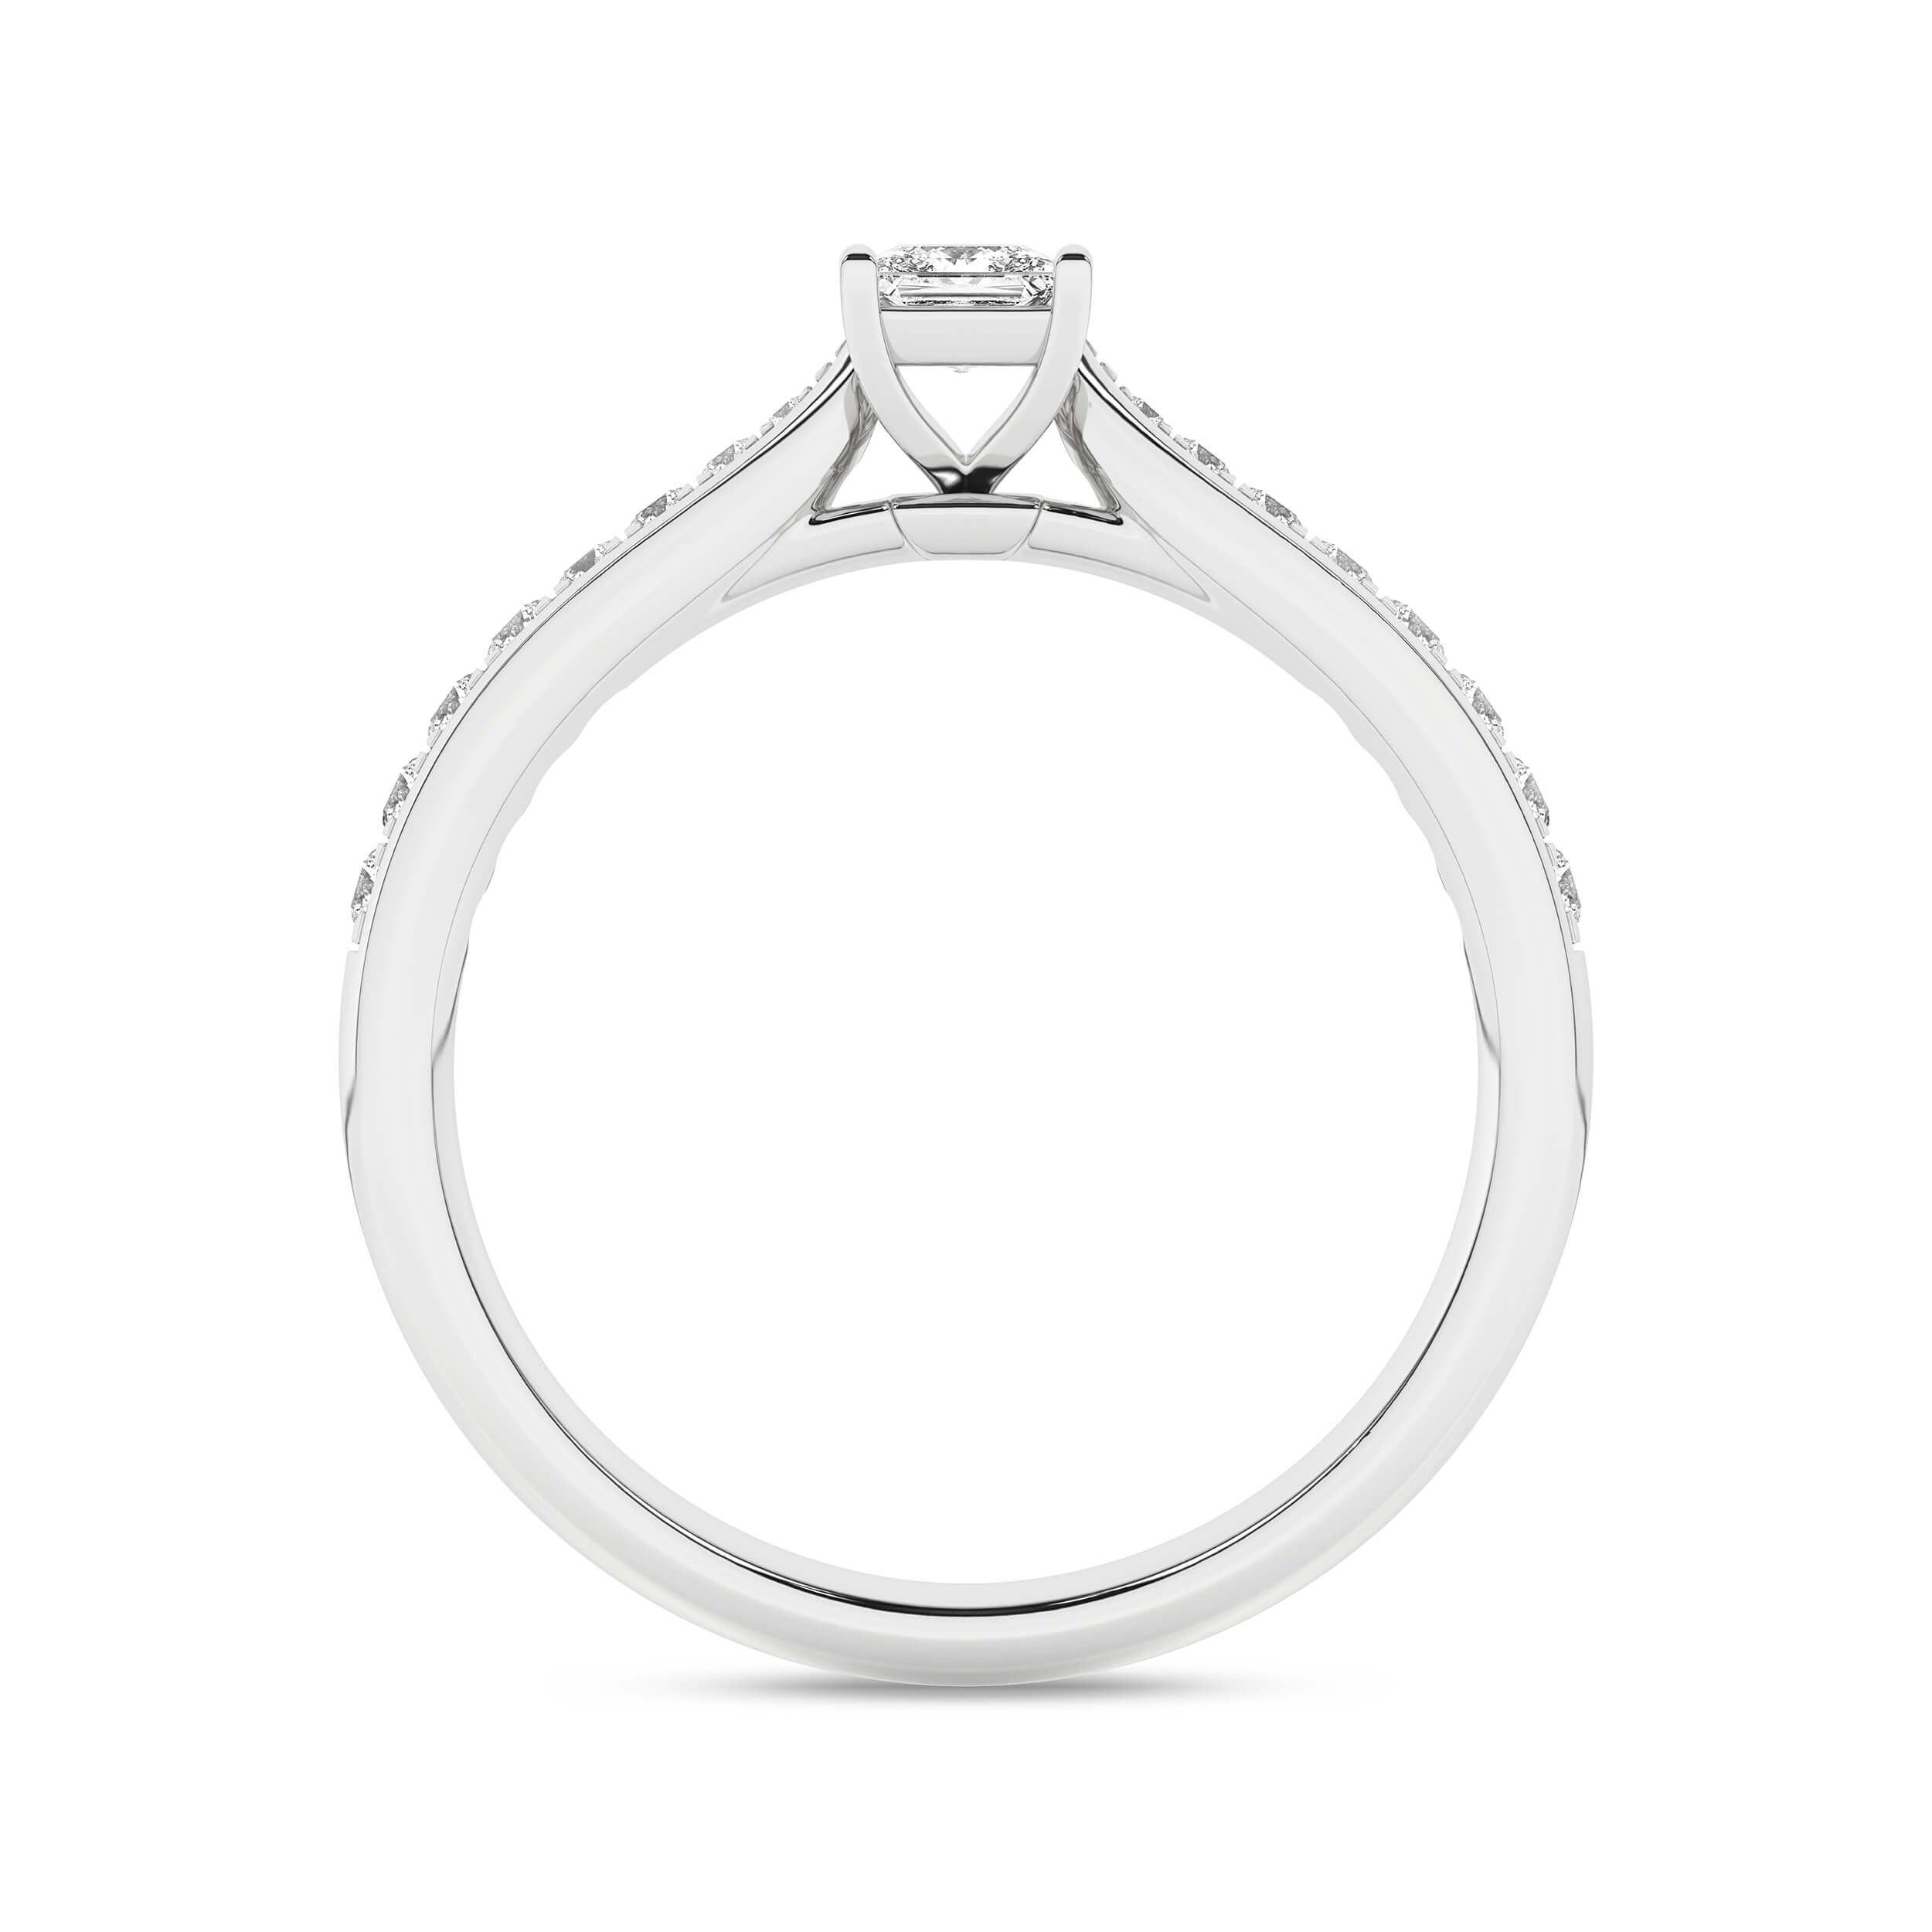 Inel de logodna din Aur Alb 14K cu Diamante 0.40Ct, articol RB17684EG, previzualizare foto 3